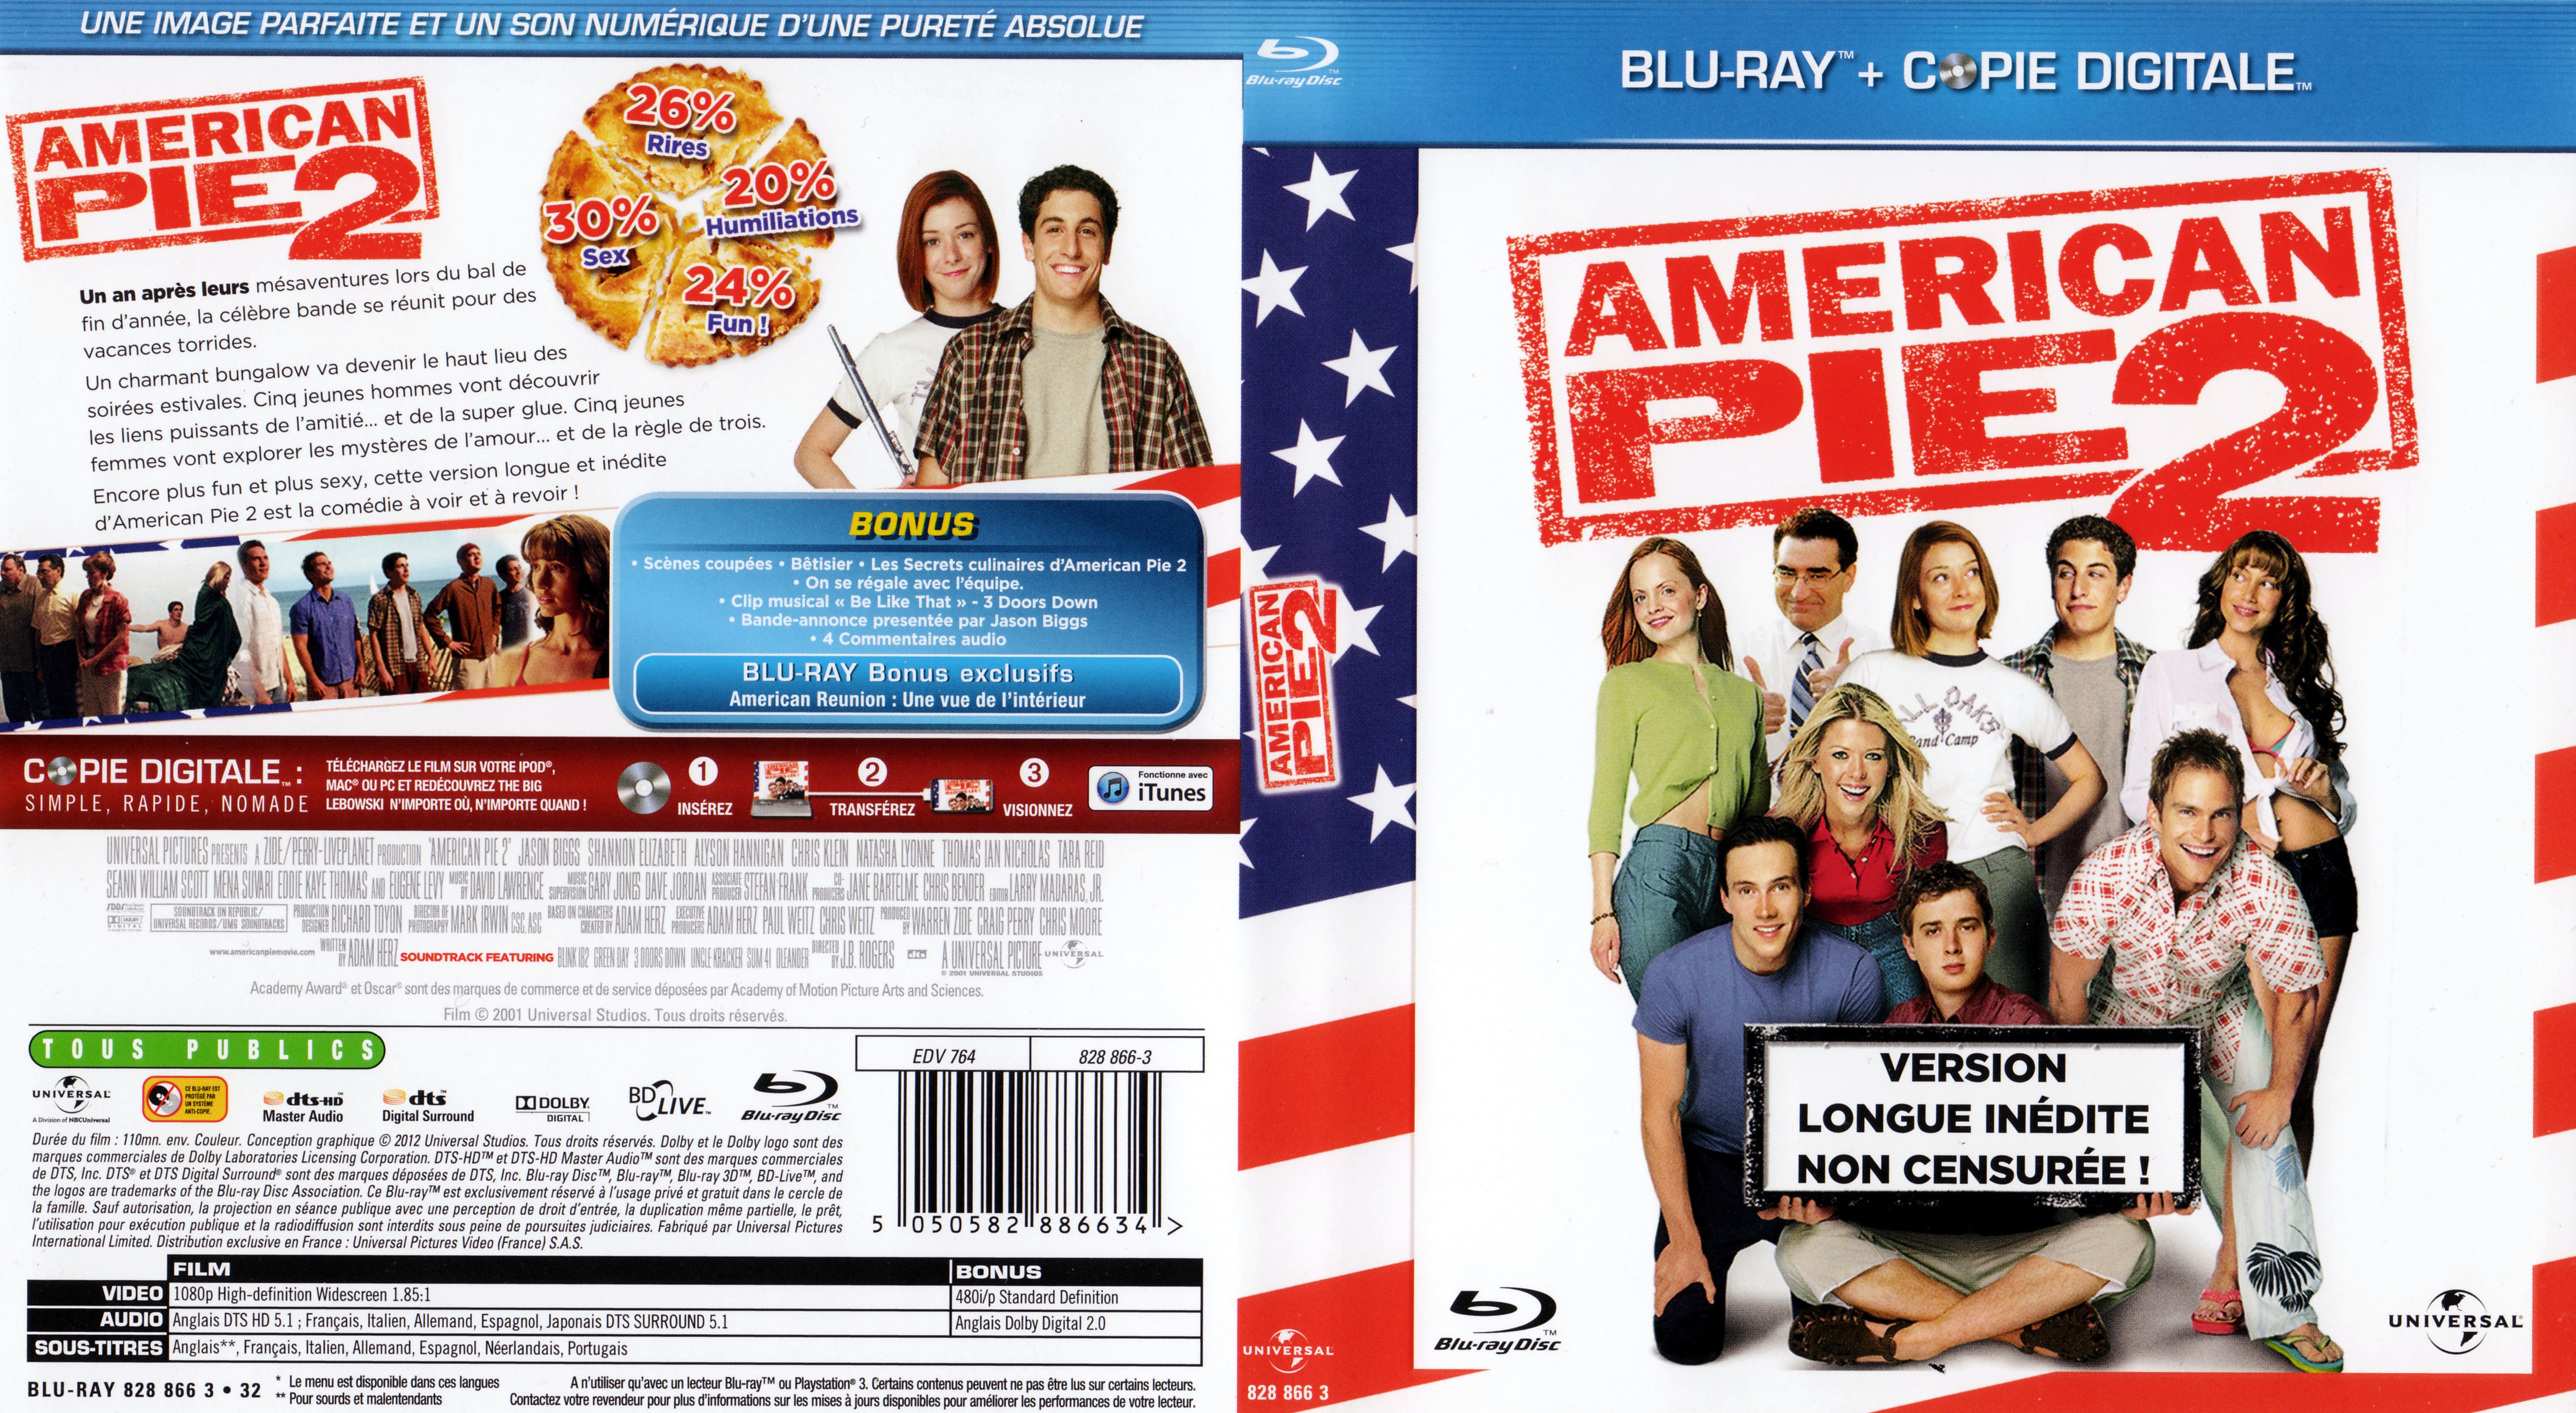 Jaquette DVD American pie 2 (BLU-RAY)